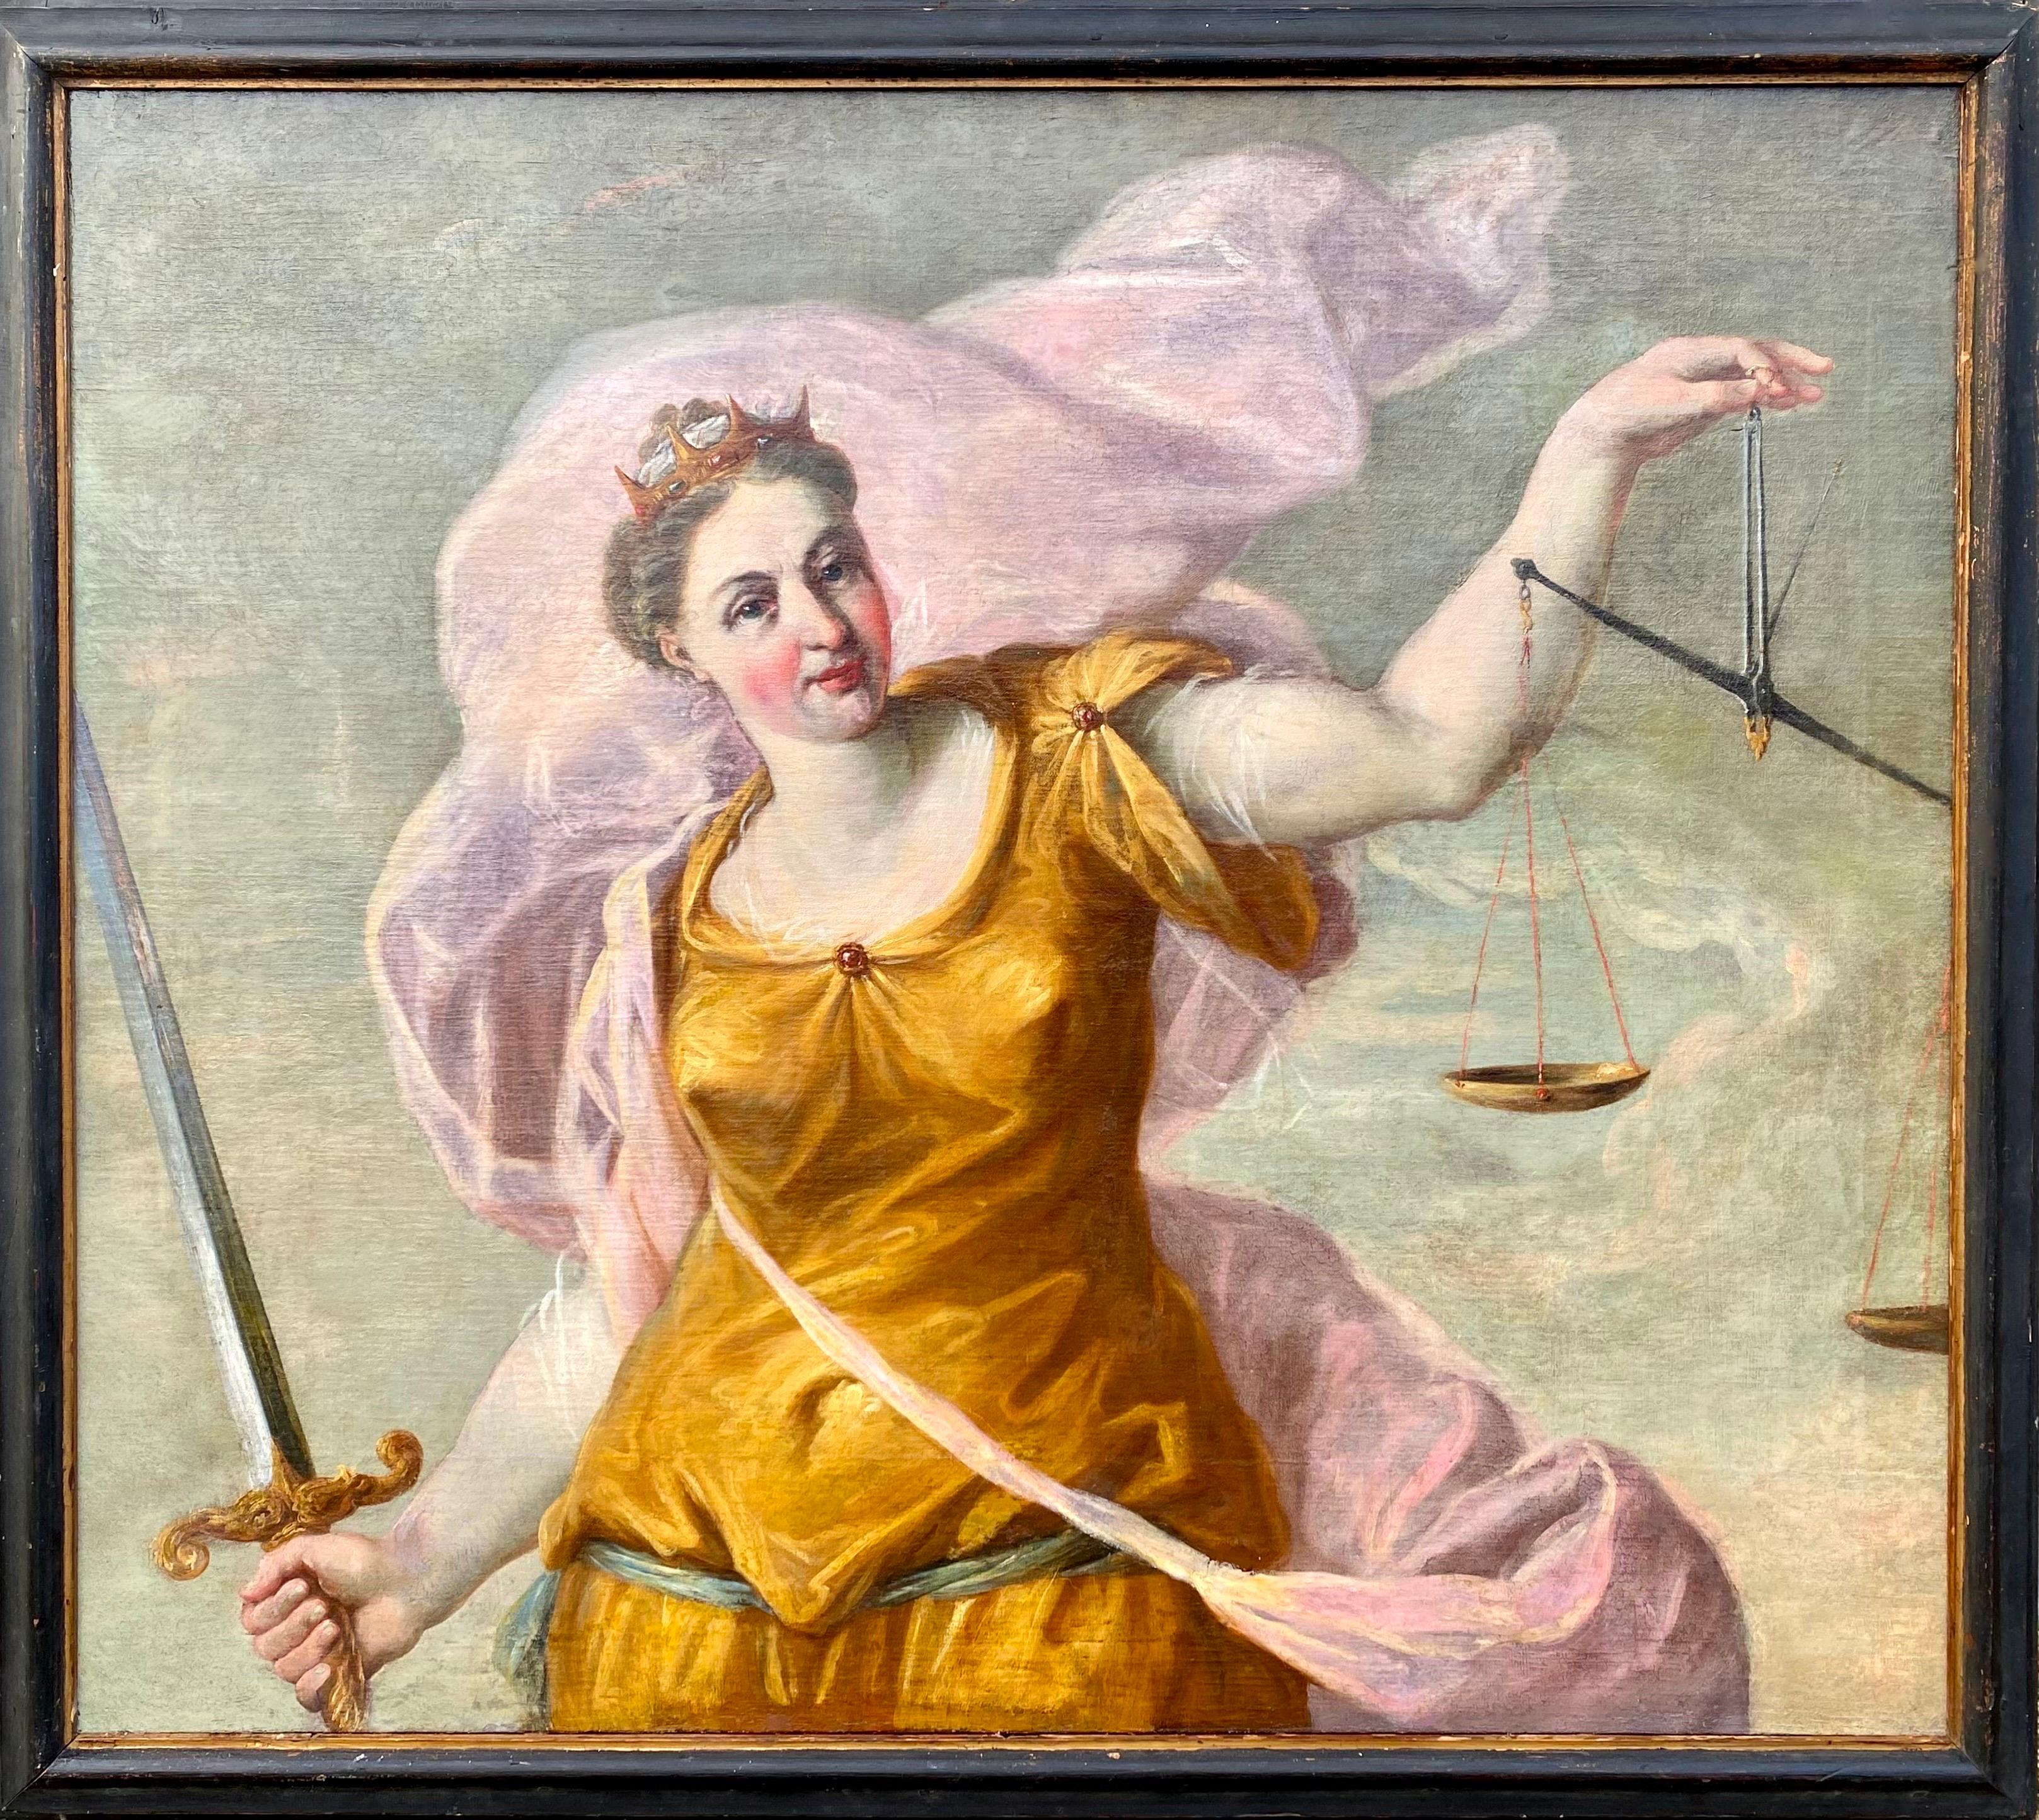 Giulio Cirello Figurative Painting - Huge 17th century Italian old master painting - Justitia - Lady Justice